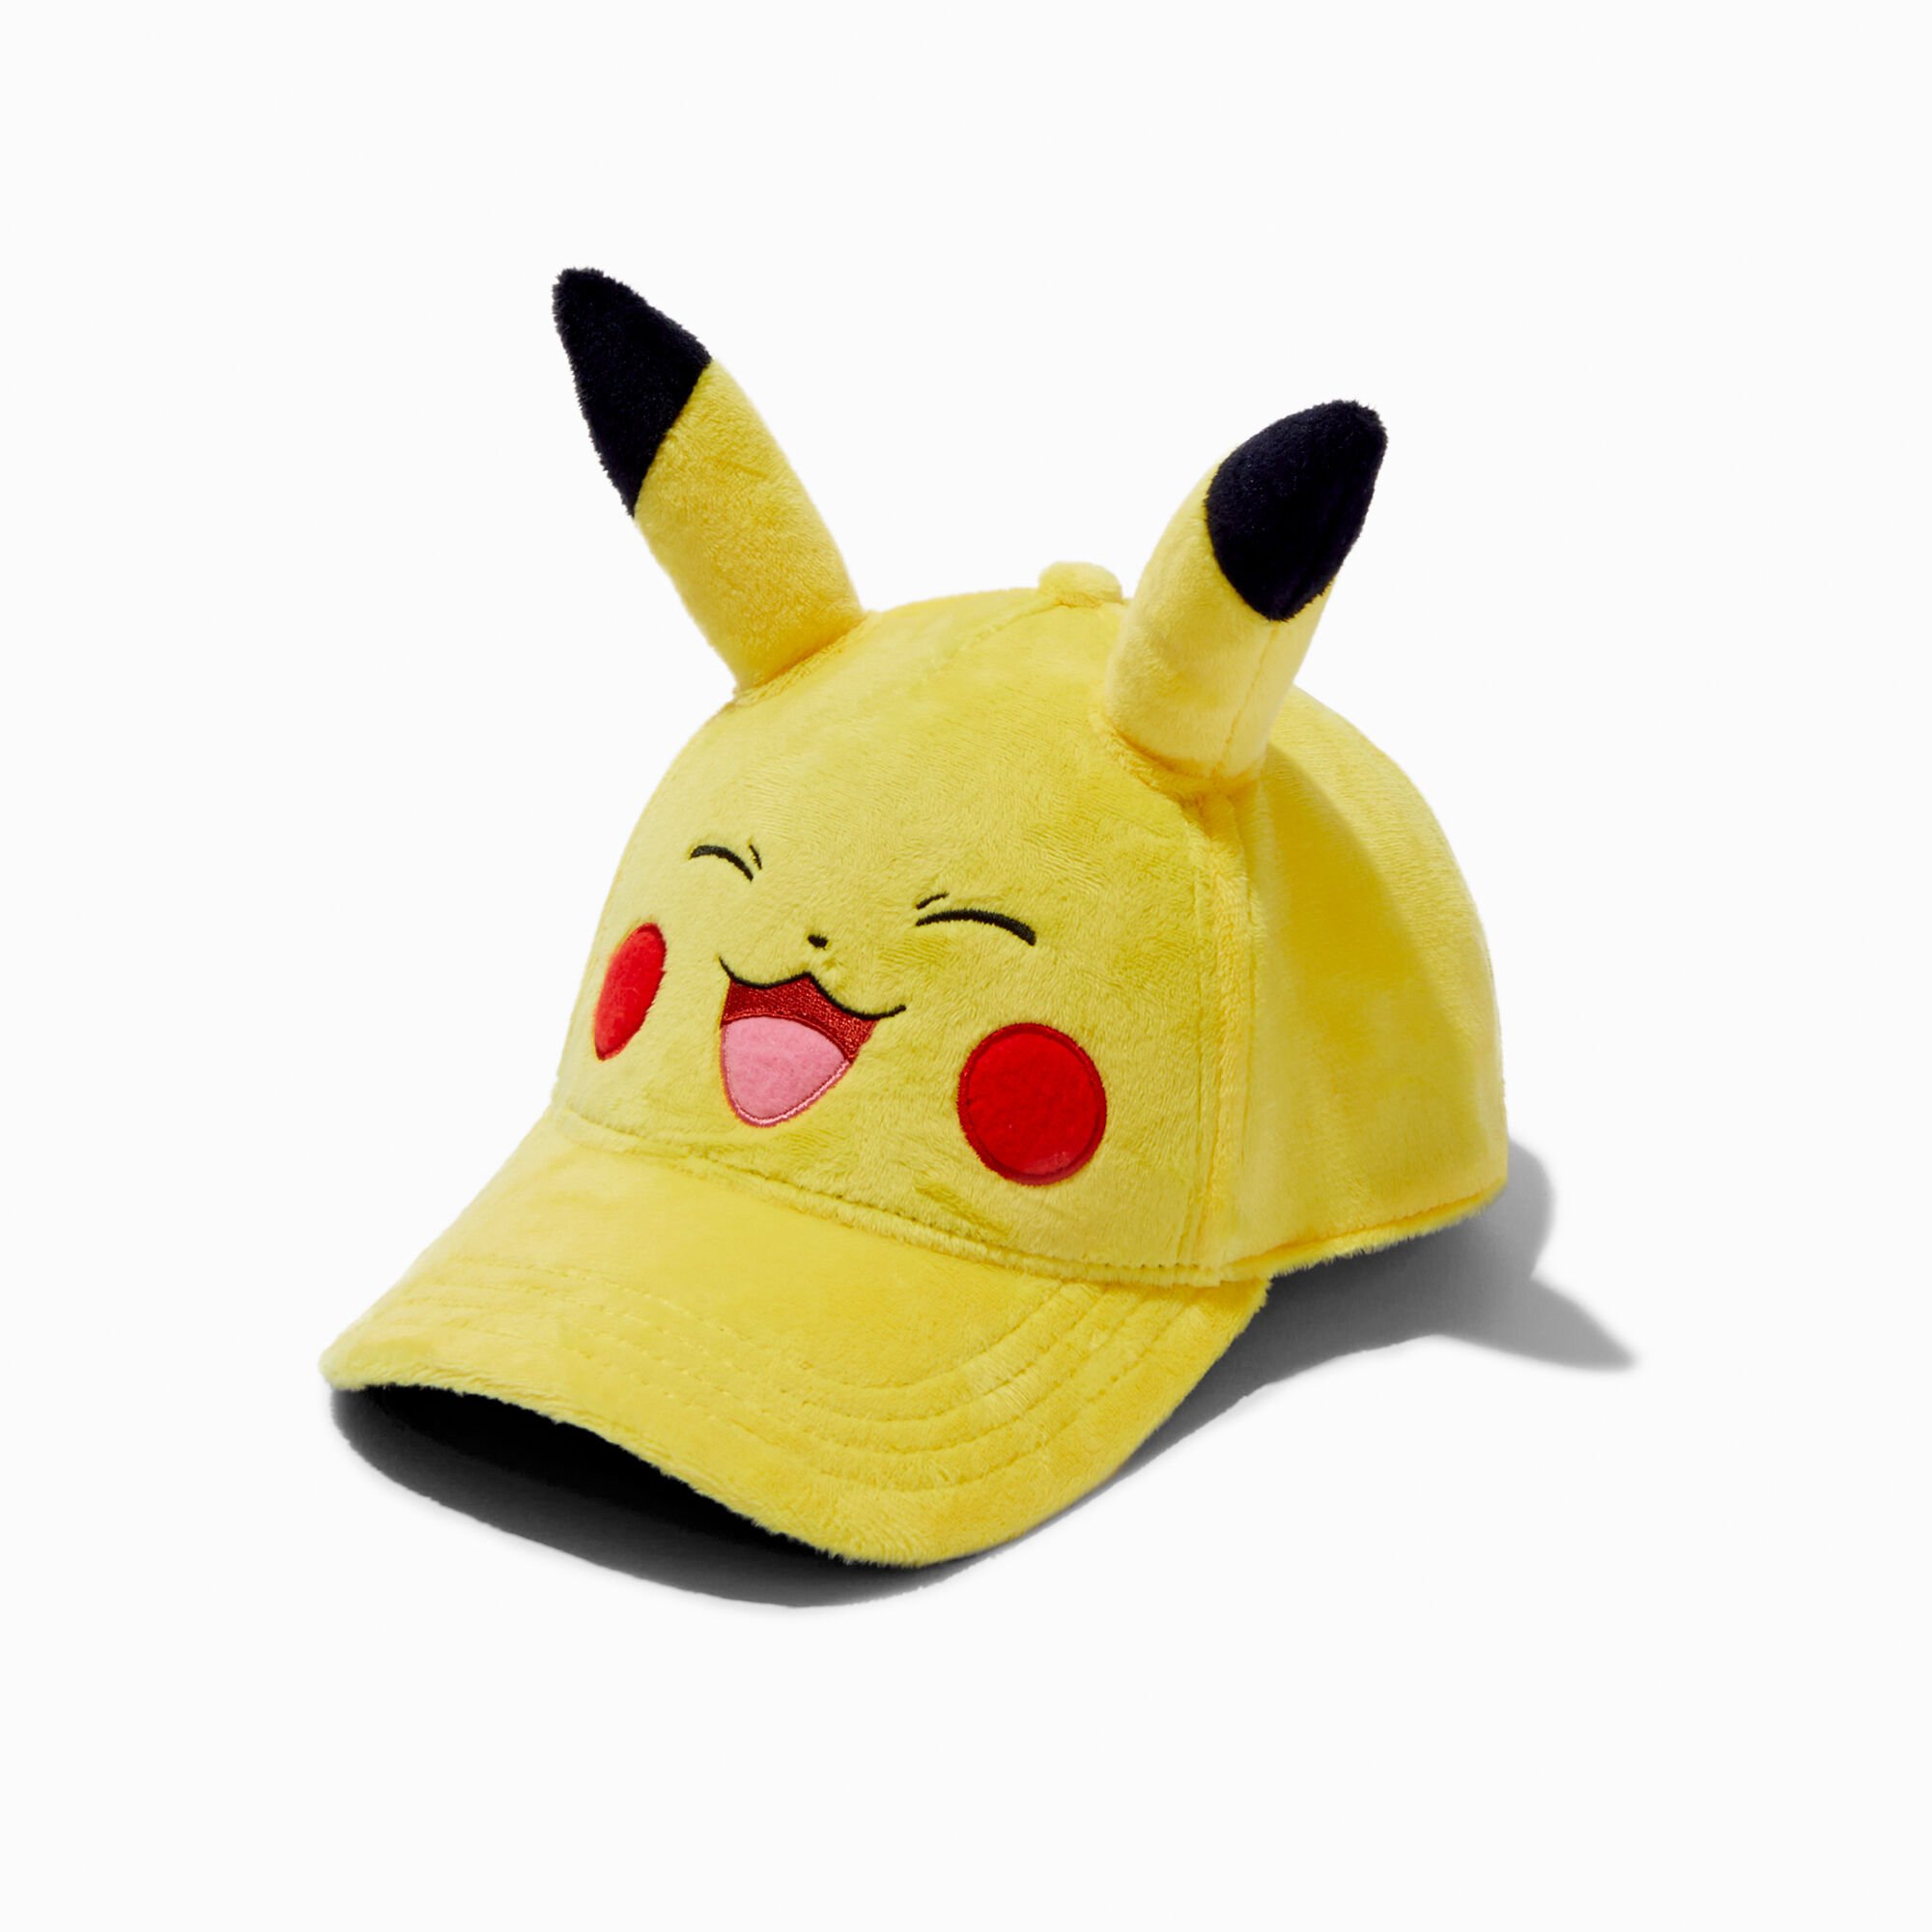 View Claires Pokémon Pikachu Novelty Hat information